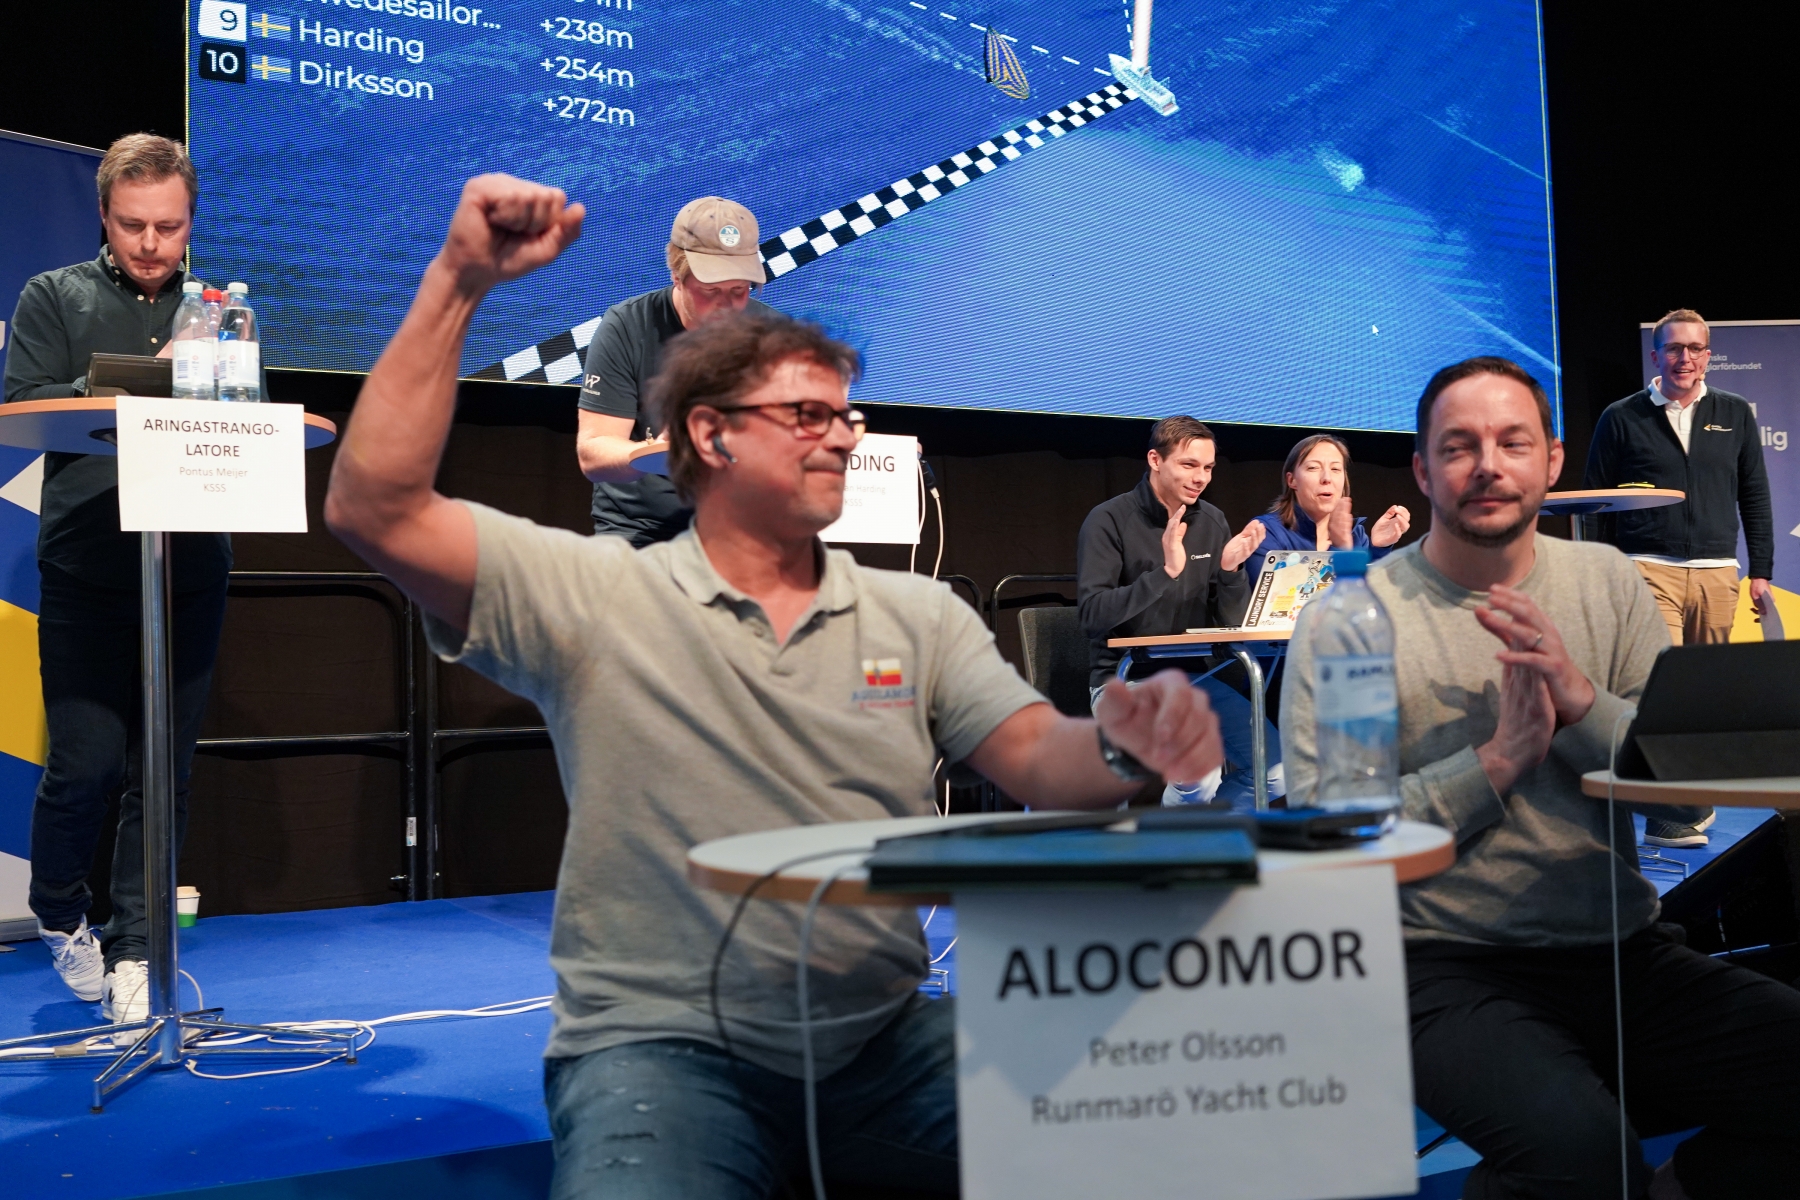 image: Alocomor/Peter Olsson svensk mästare i e-segling